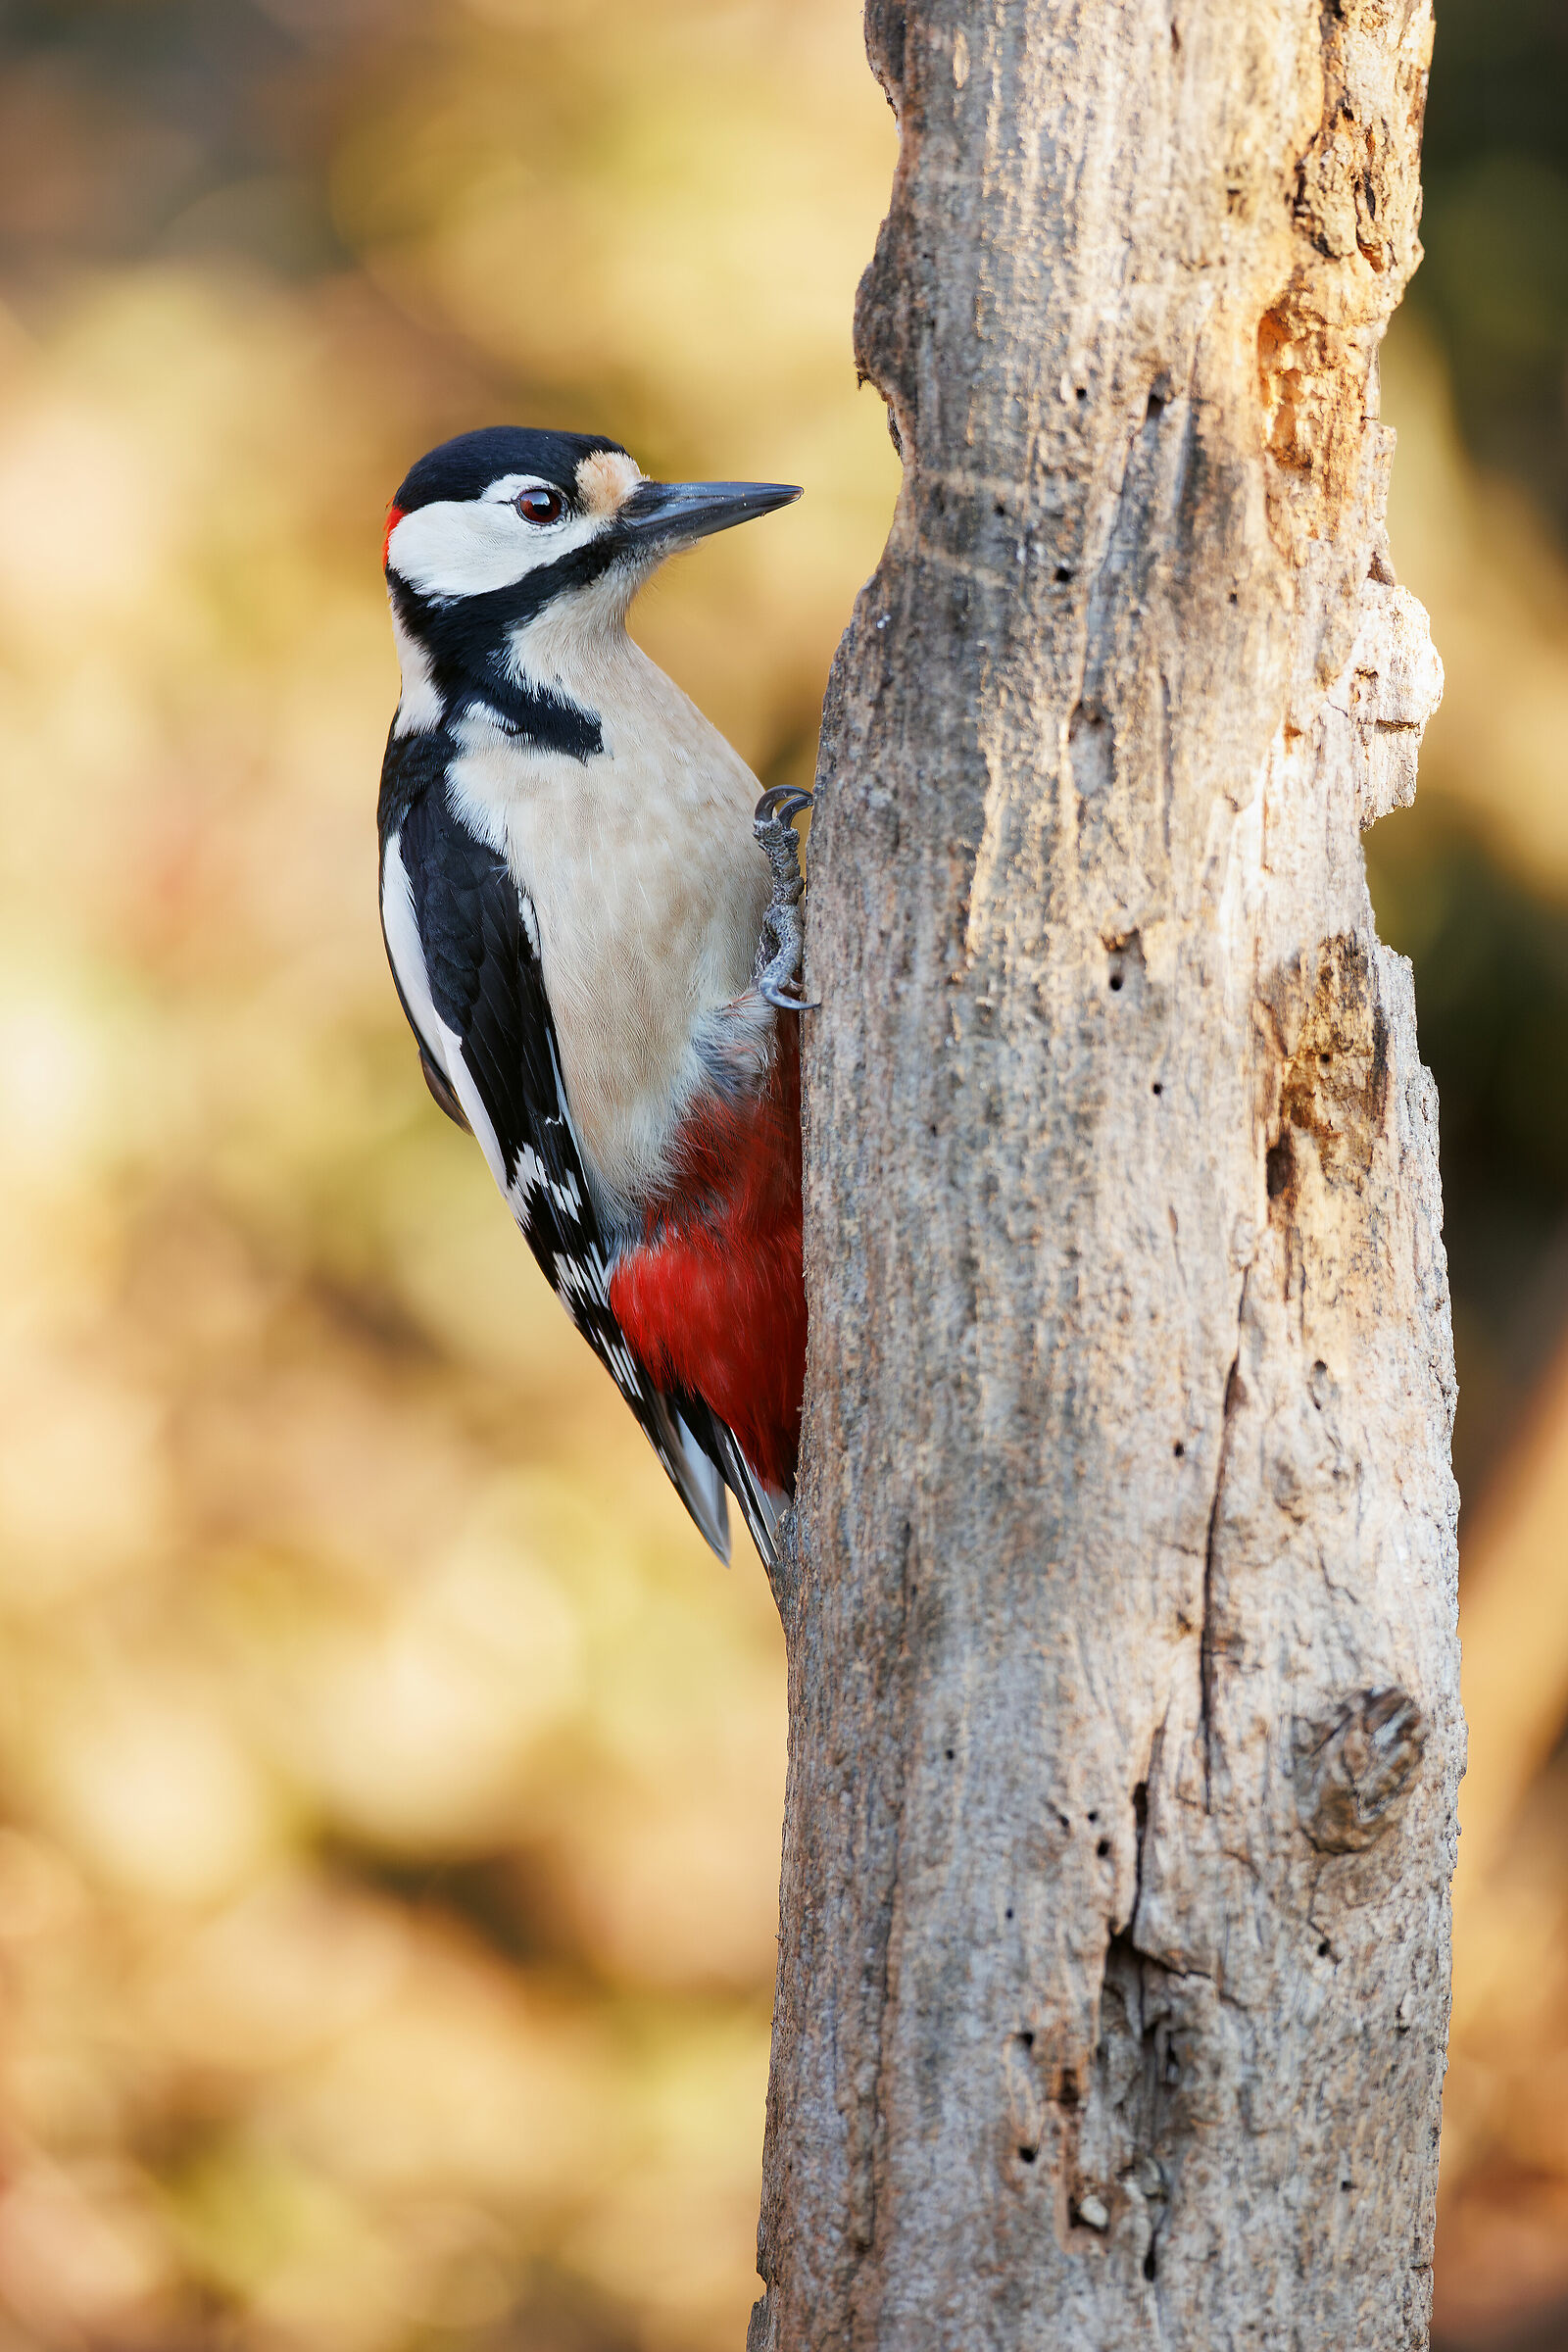 My first woodpecker...